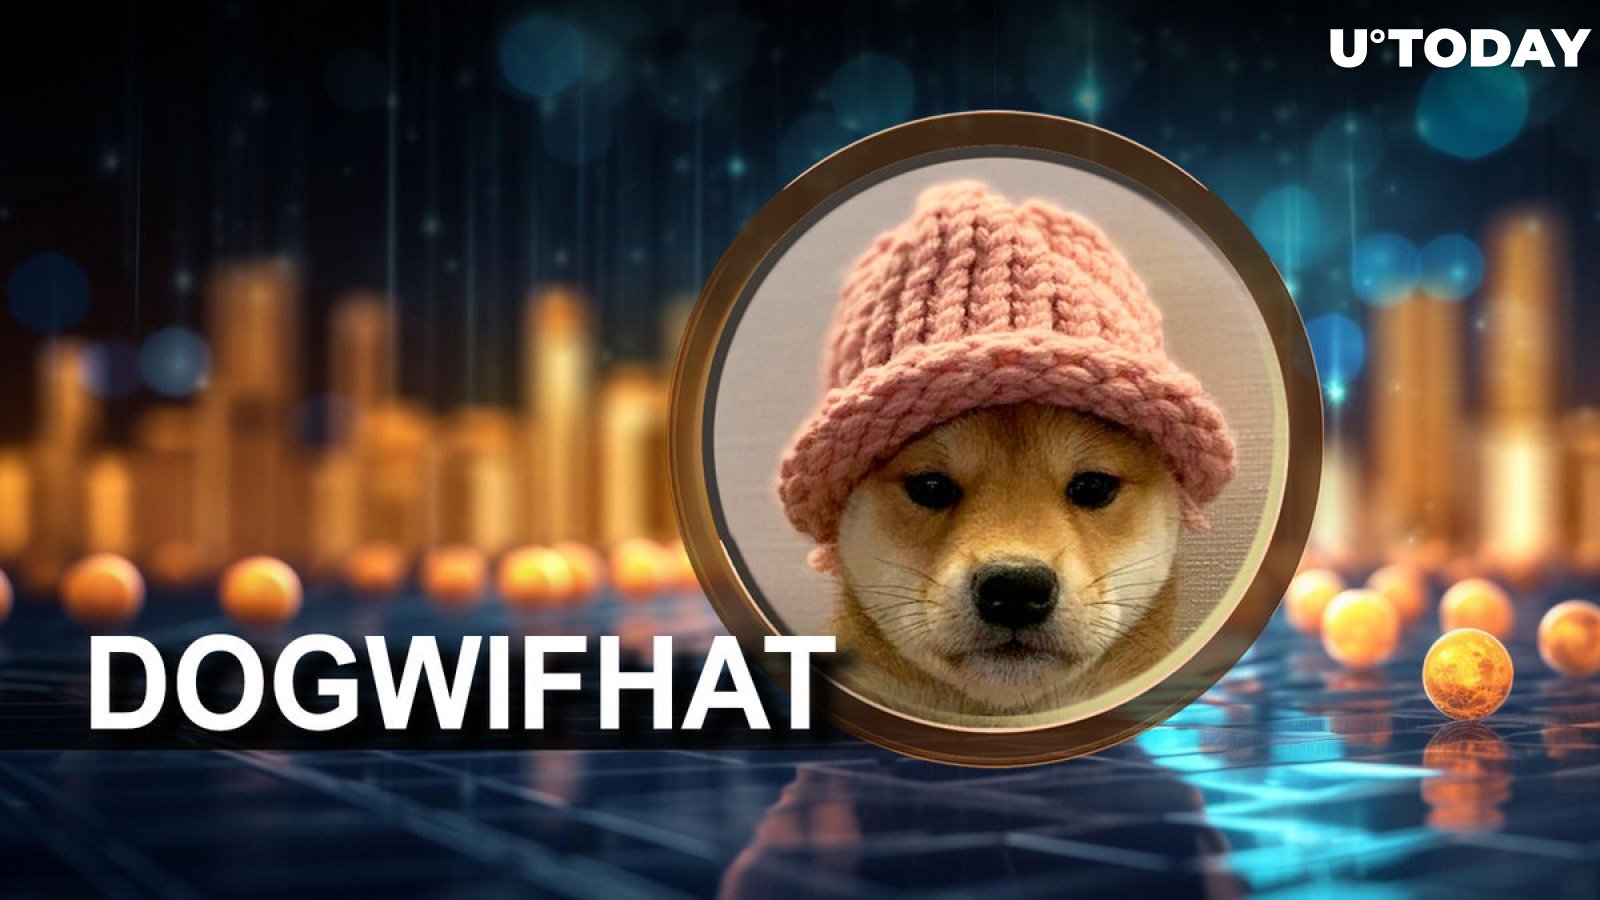 Dogwifhat (WIF) Overshadows Dogecoin (DOGE) and Shiba Inu (SHIB) in Key Metric